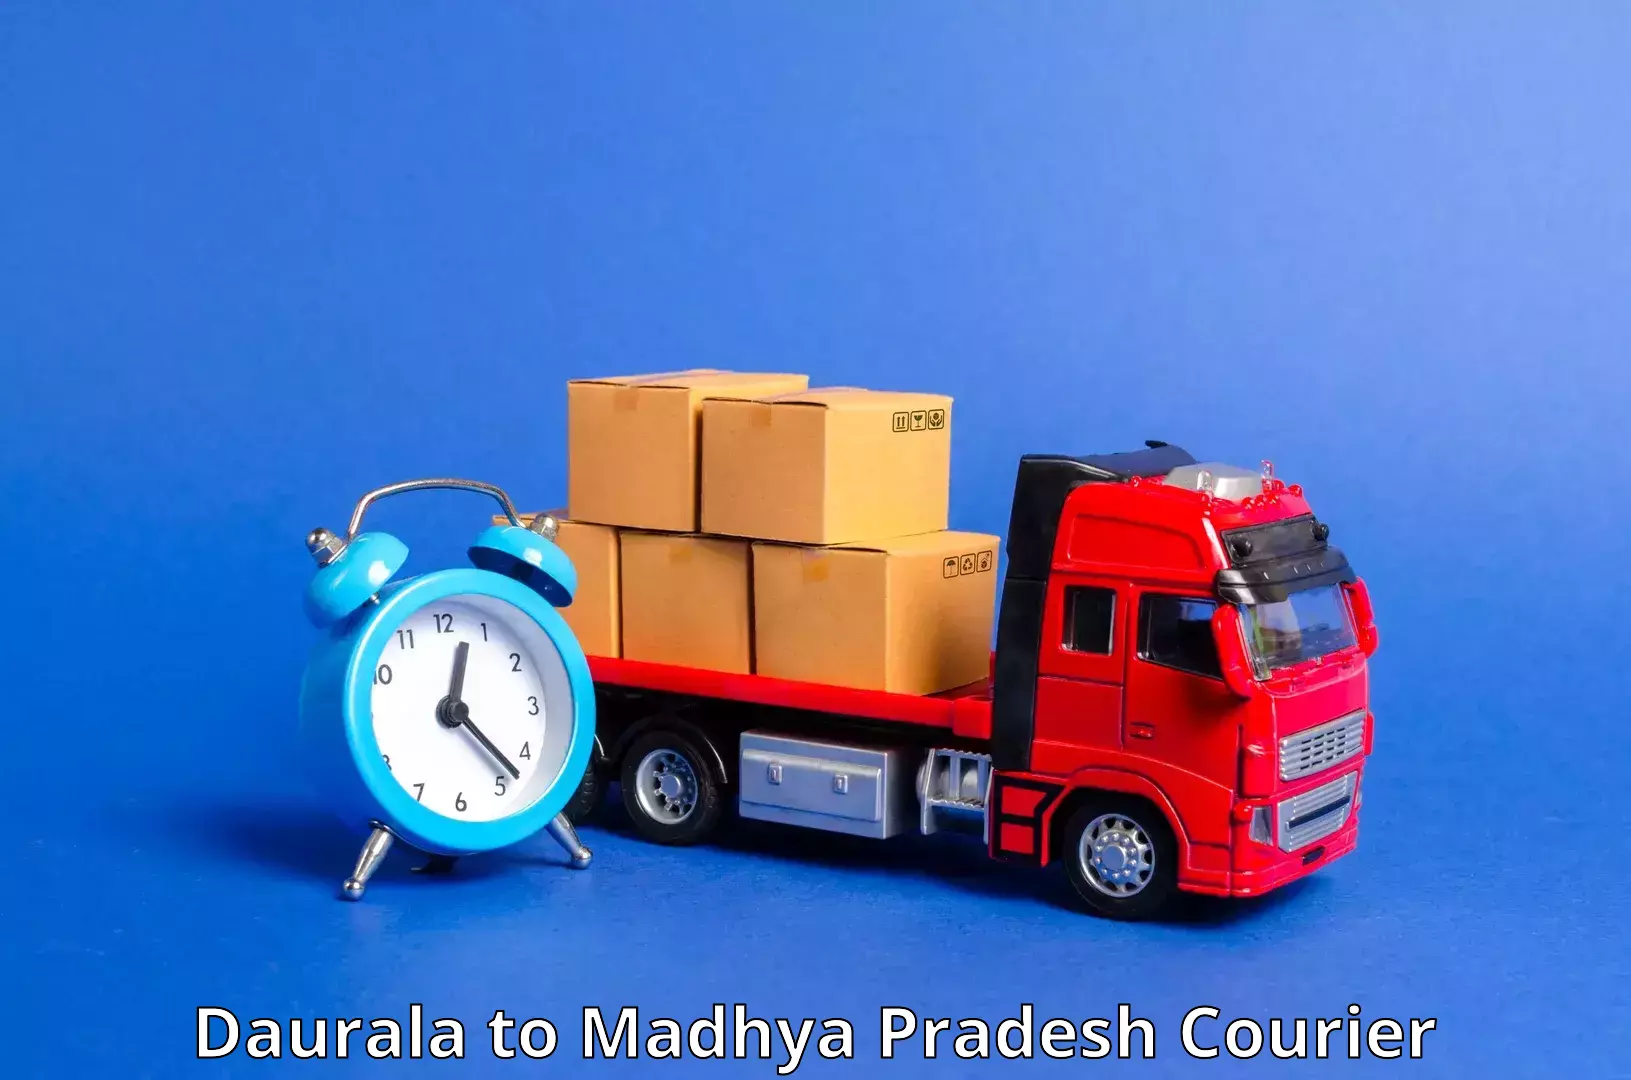 Local delivery service Daurala to Hatta